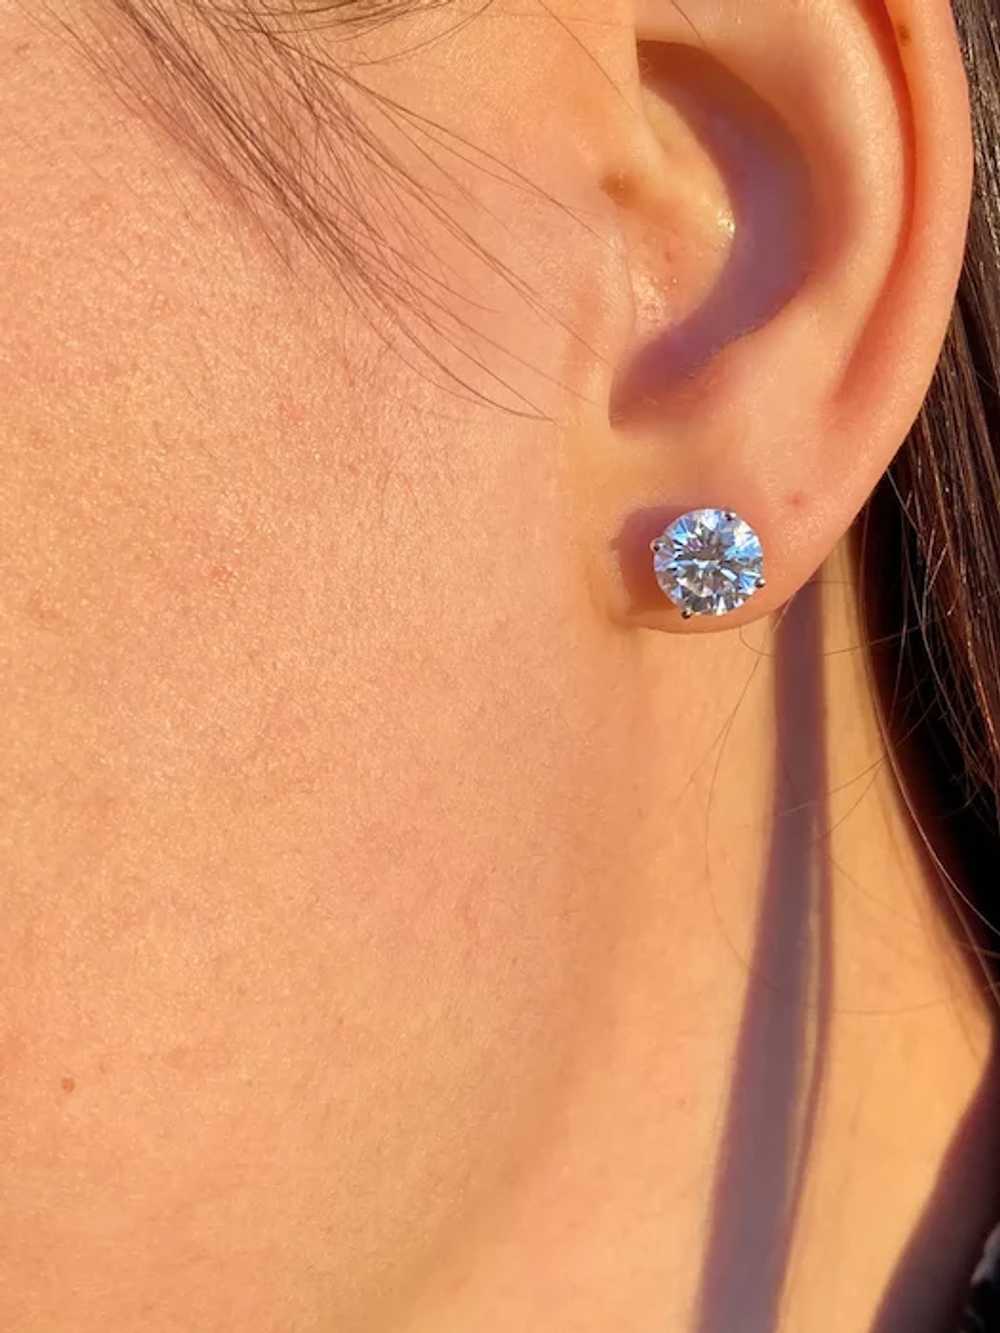 4.04 Carat Diamond Stud Earrings in White Gold - image 3